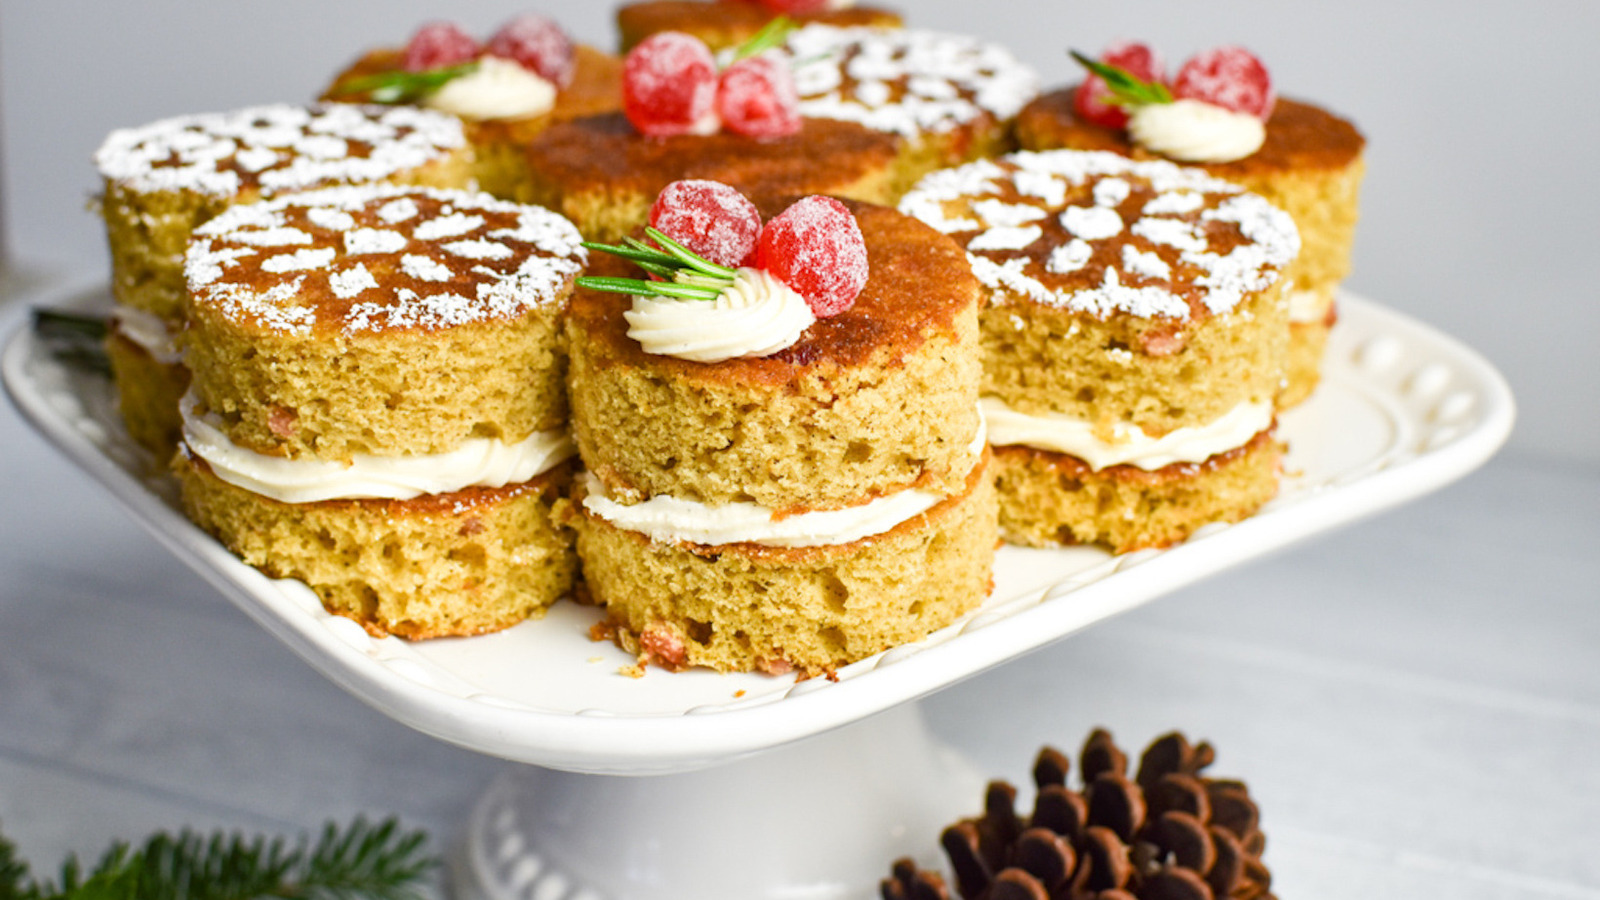 https://www.tastingtable.com/img/gallery/mini-christmas-cakes-recipe/l-intro-1639498199.jpg